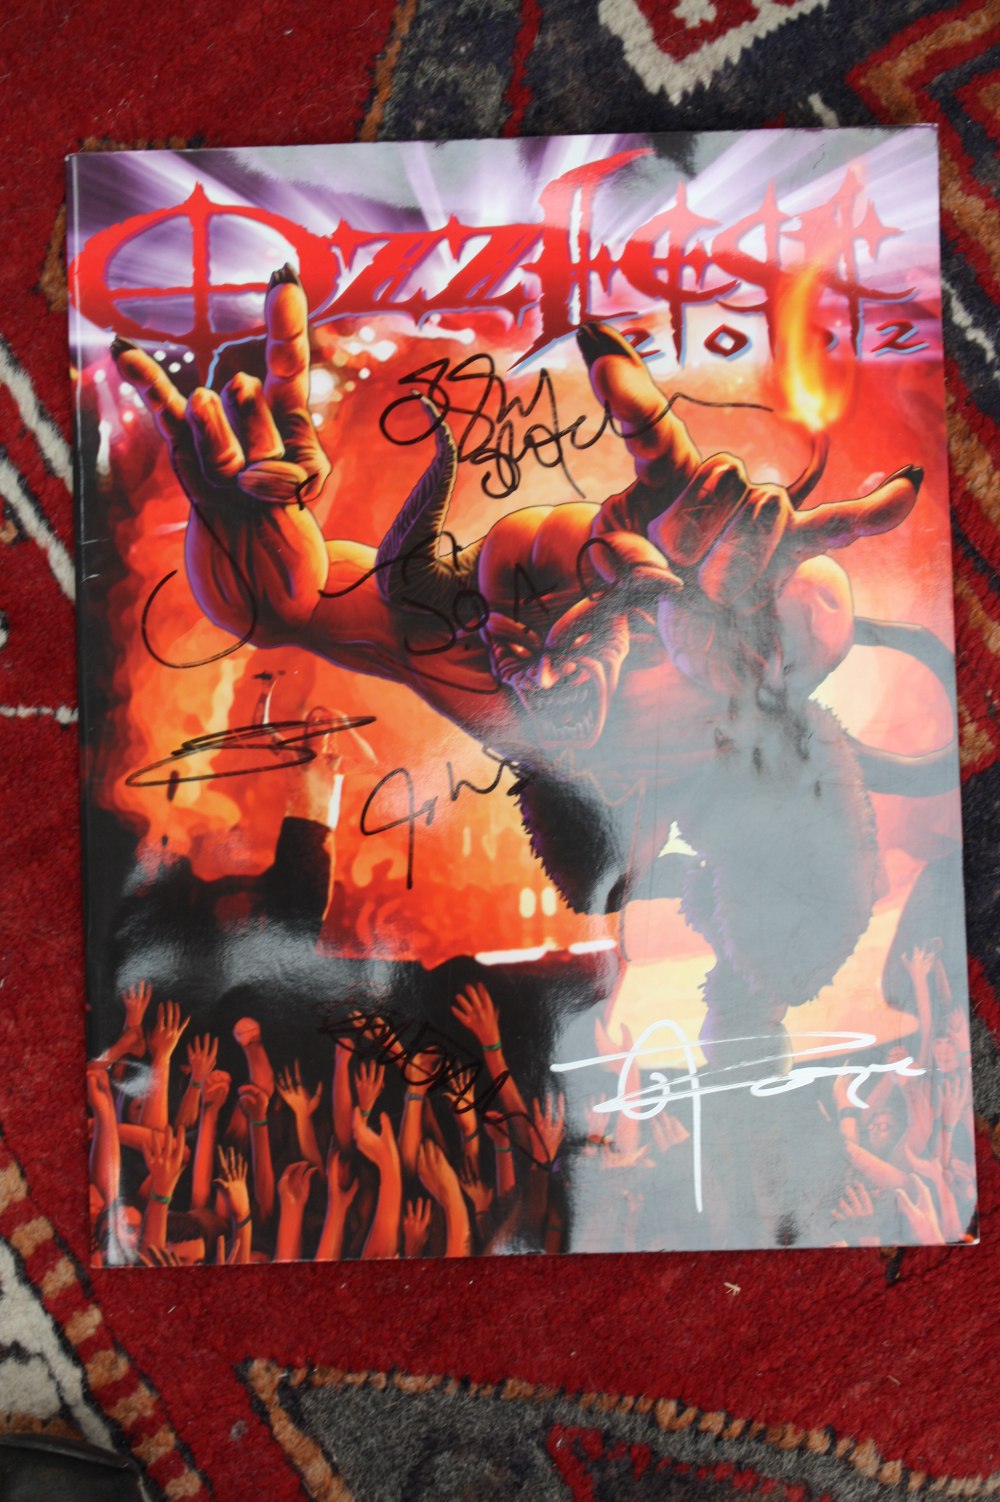 Ozzfest 2012 tour program signed by Ozzy Osbourne, Rob Zombie and System of a Down